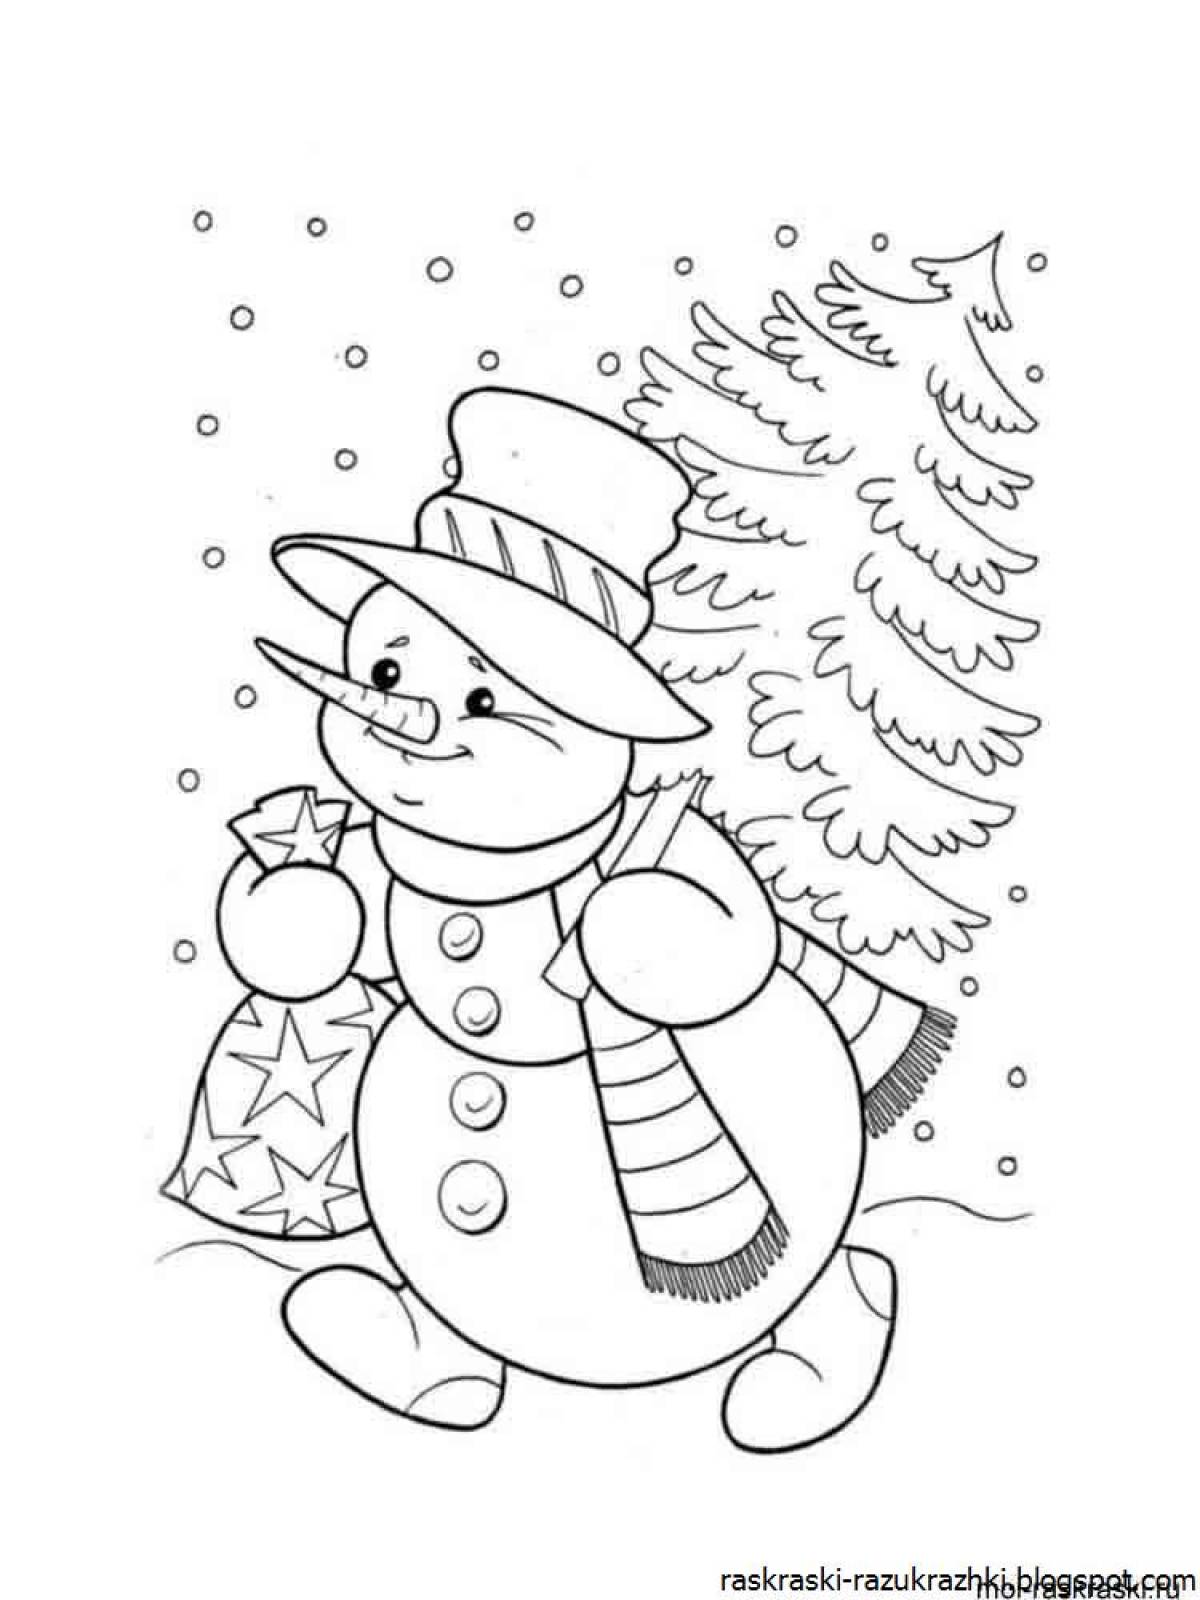 Violent snowman coloring book